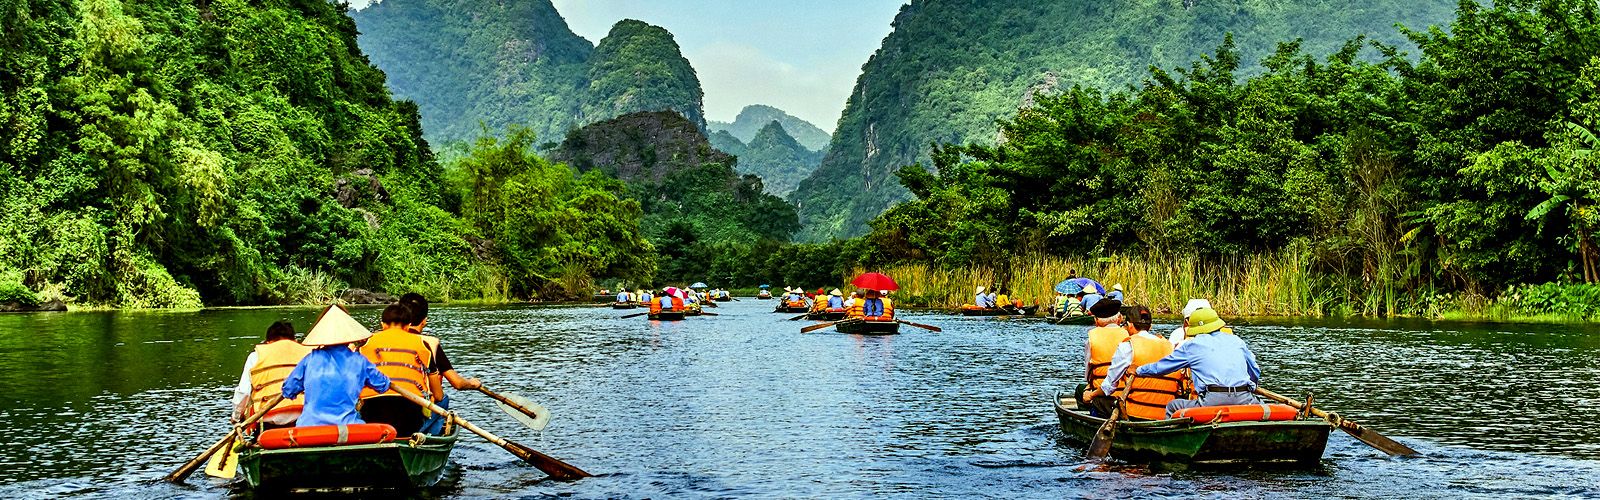 Vietnam Free & Easy Tours